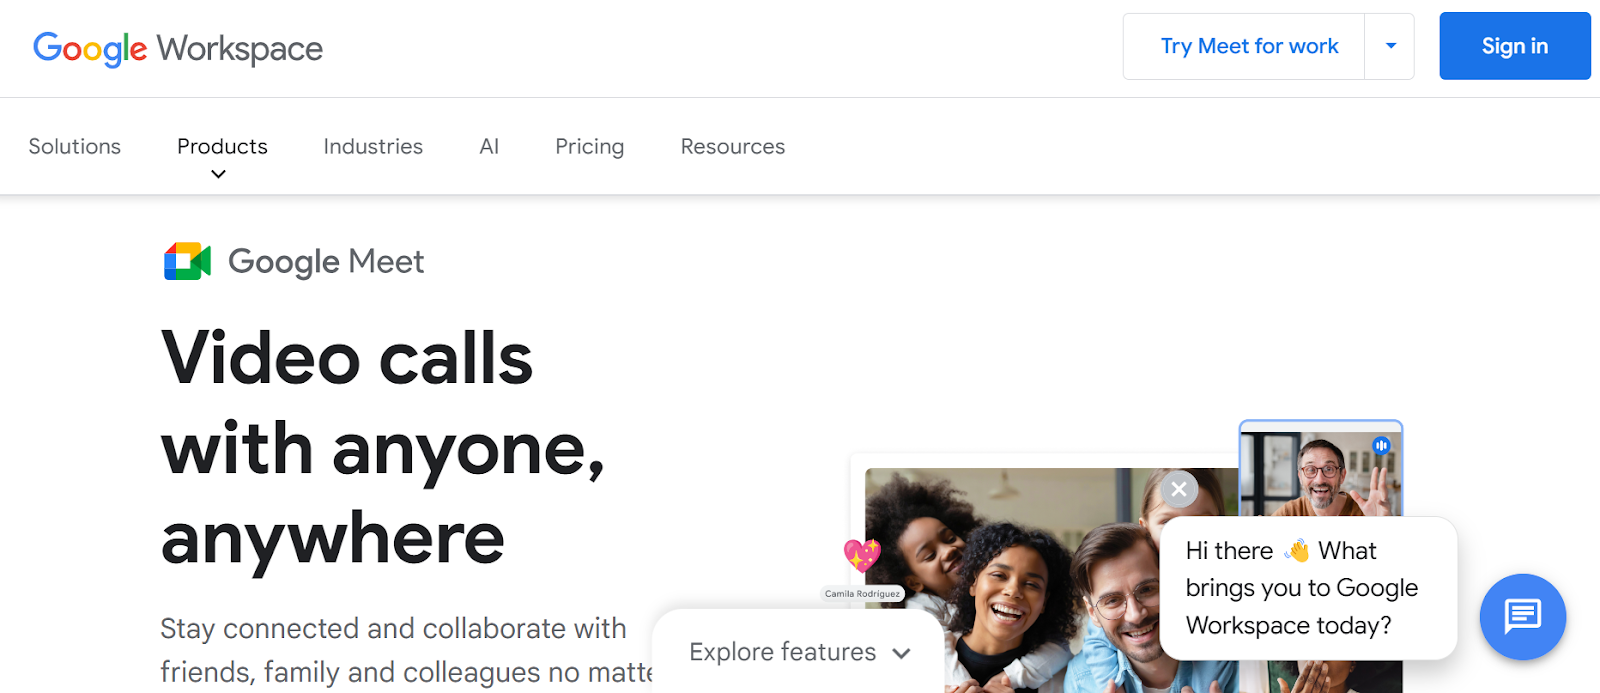 Google Meet website snapshot highlighting the services it offers.